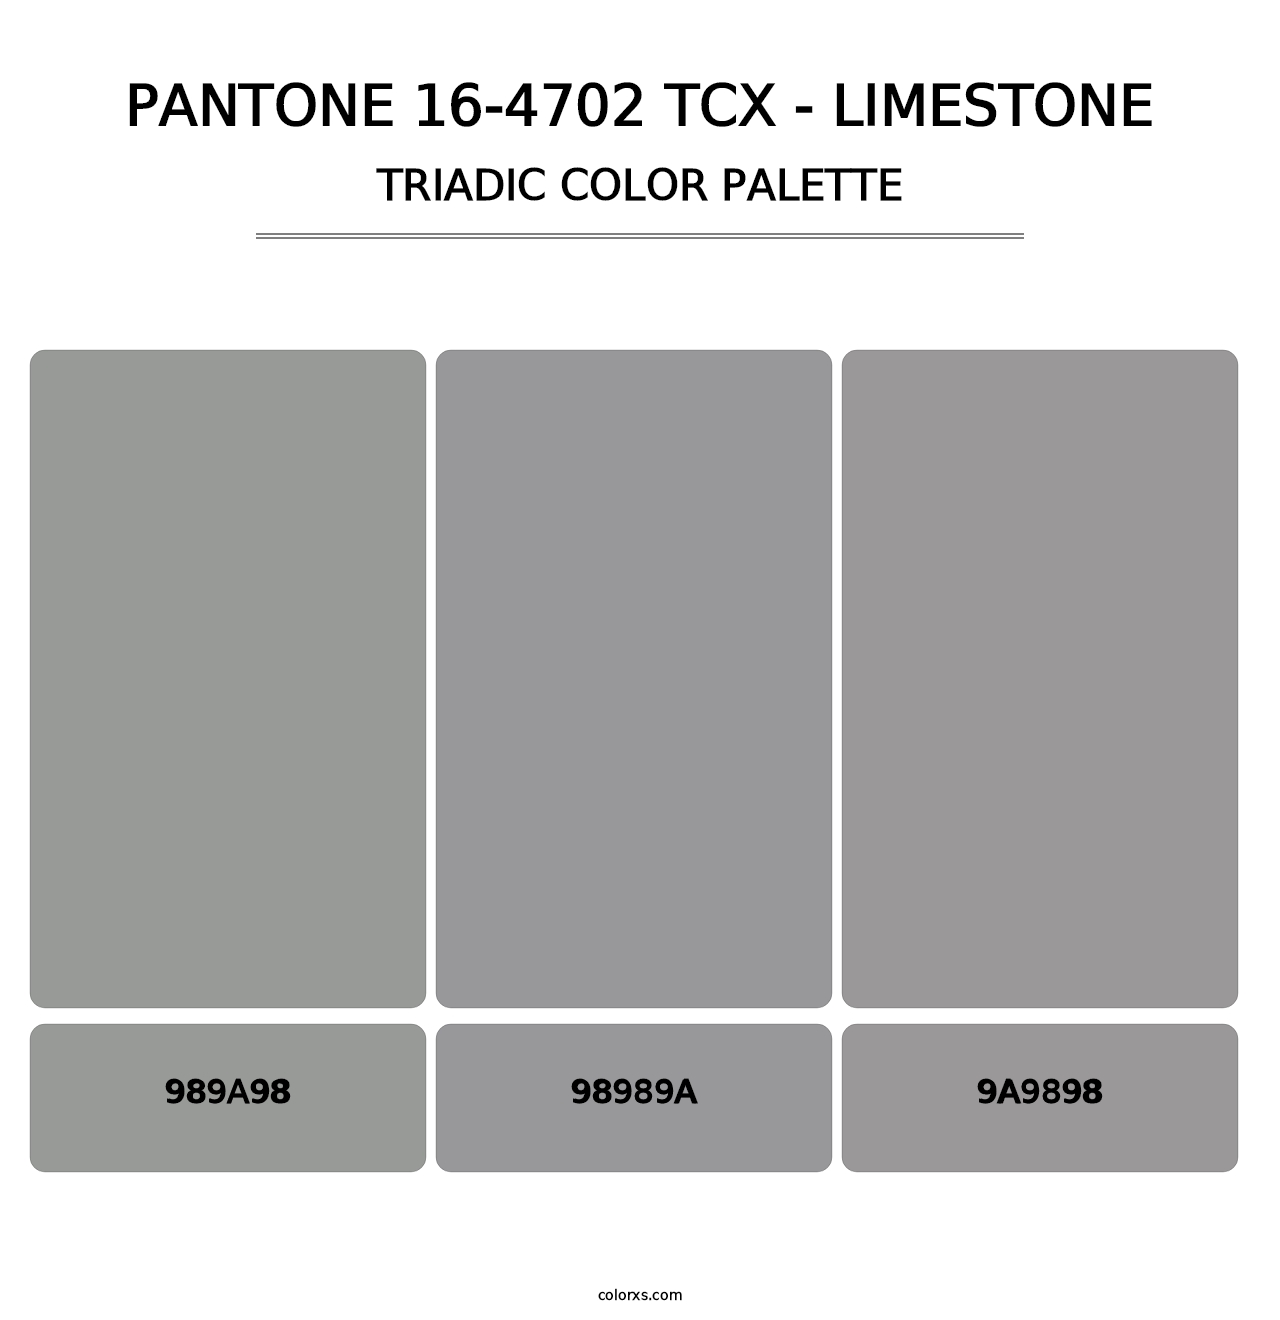 PANTONE 16-4702 TCX - Limestone - Triadic Color Palette